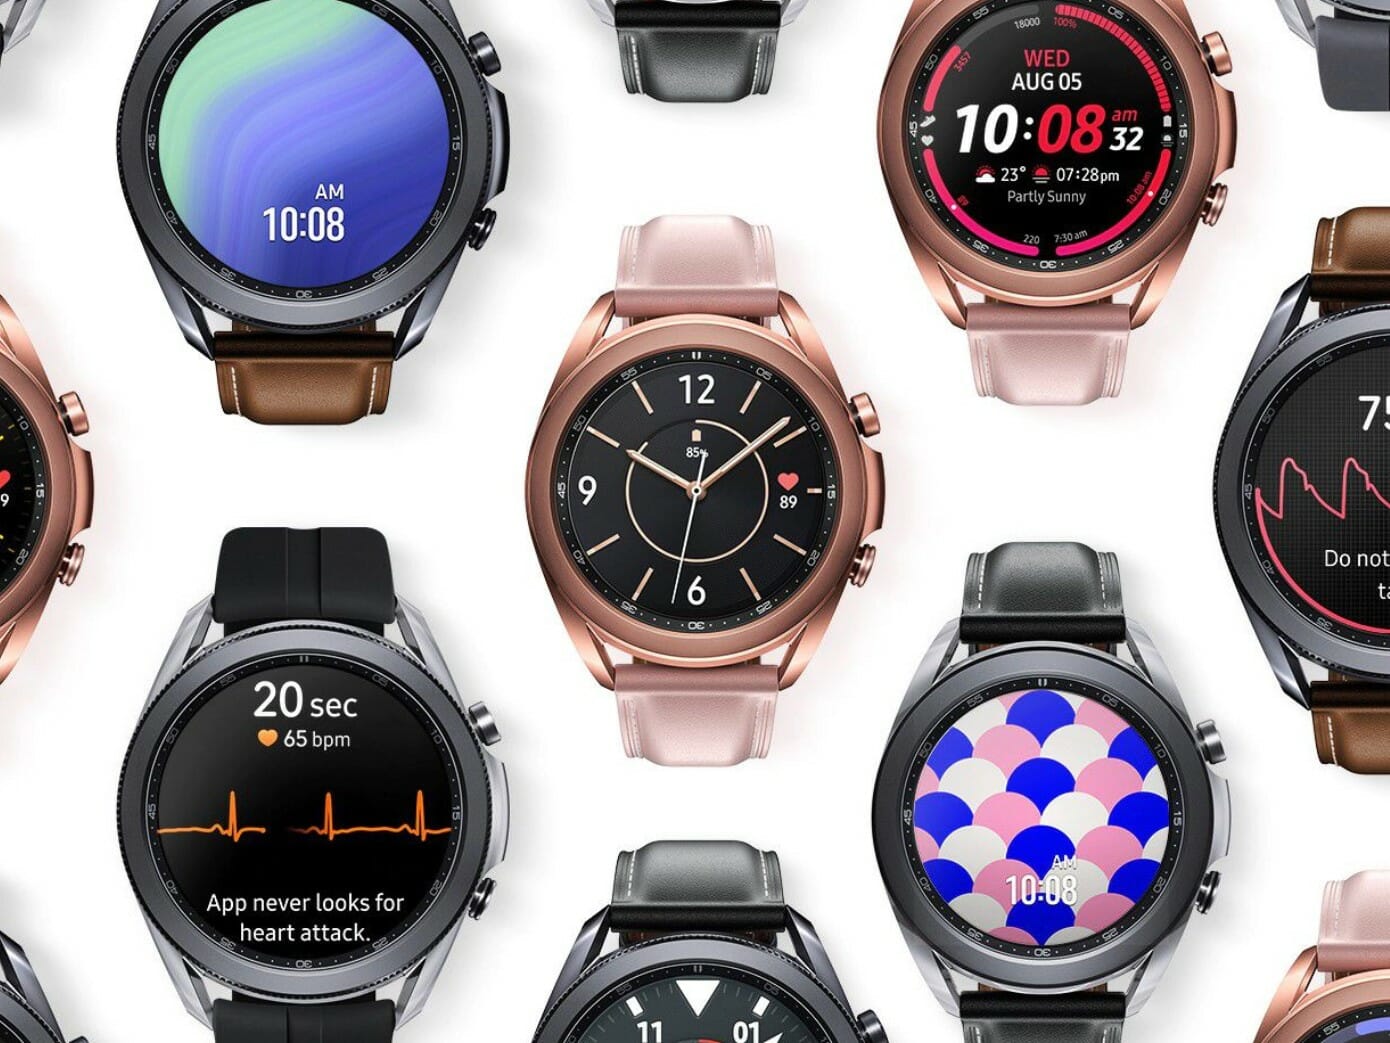 Samsung Galaxy Watch3 Malaysia: Everything that matters